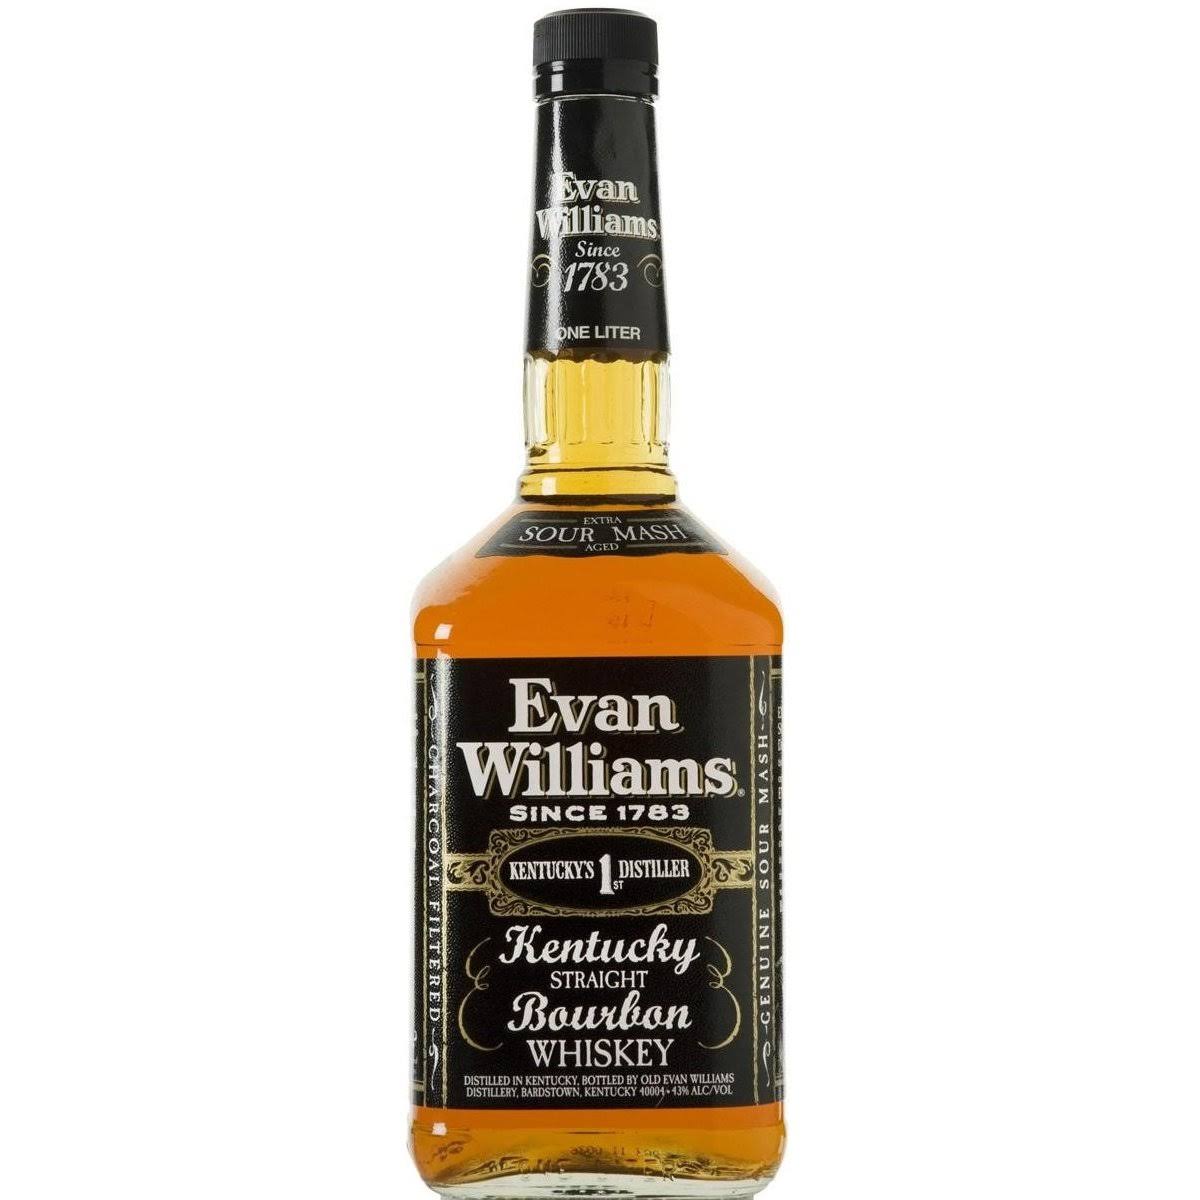 Evan Williams Kentucky Straight Bourbon Whiskey - 1.75l